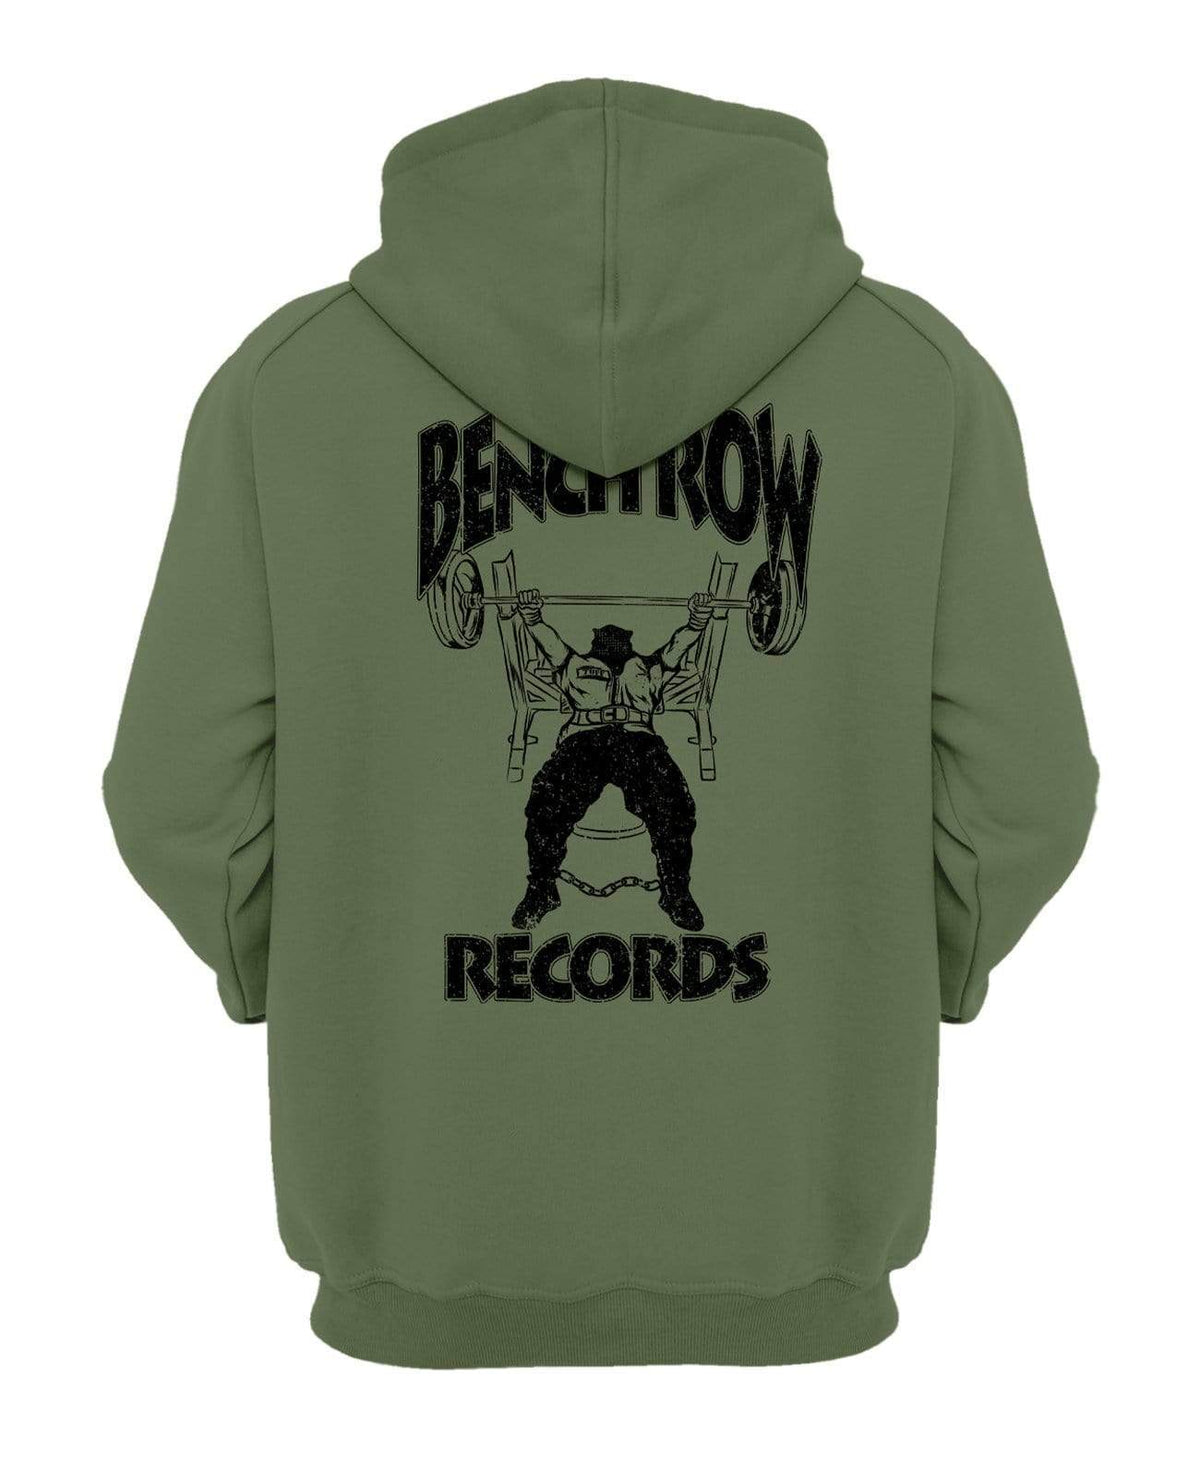 Bench Row Records Hooded Sweatshirt XS / Military Green TuffWraps.com